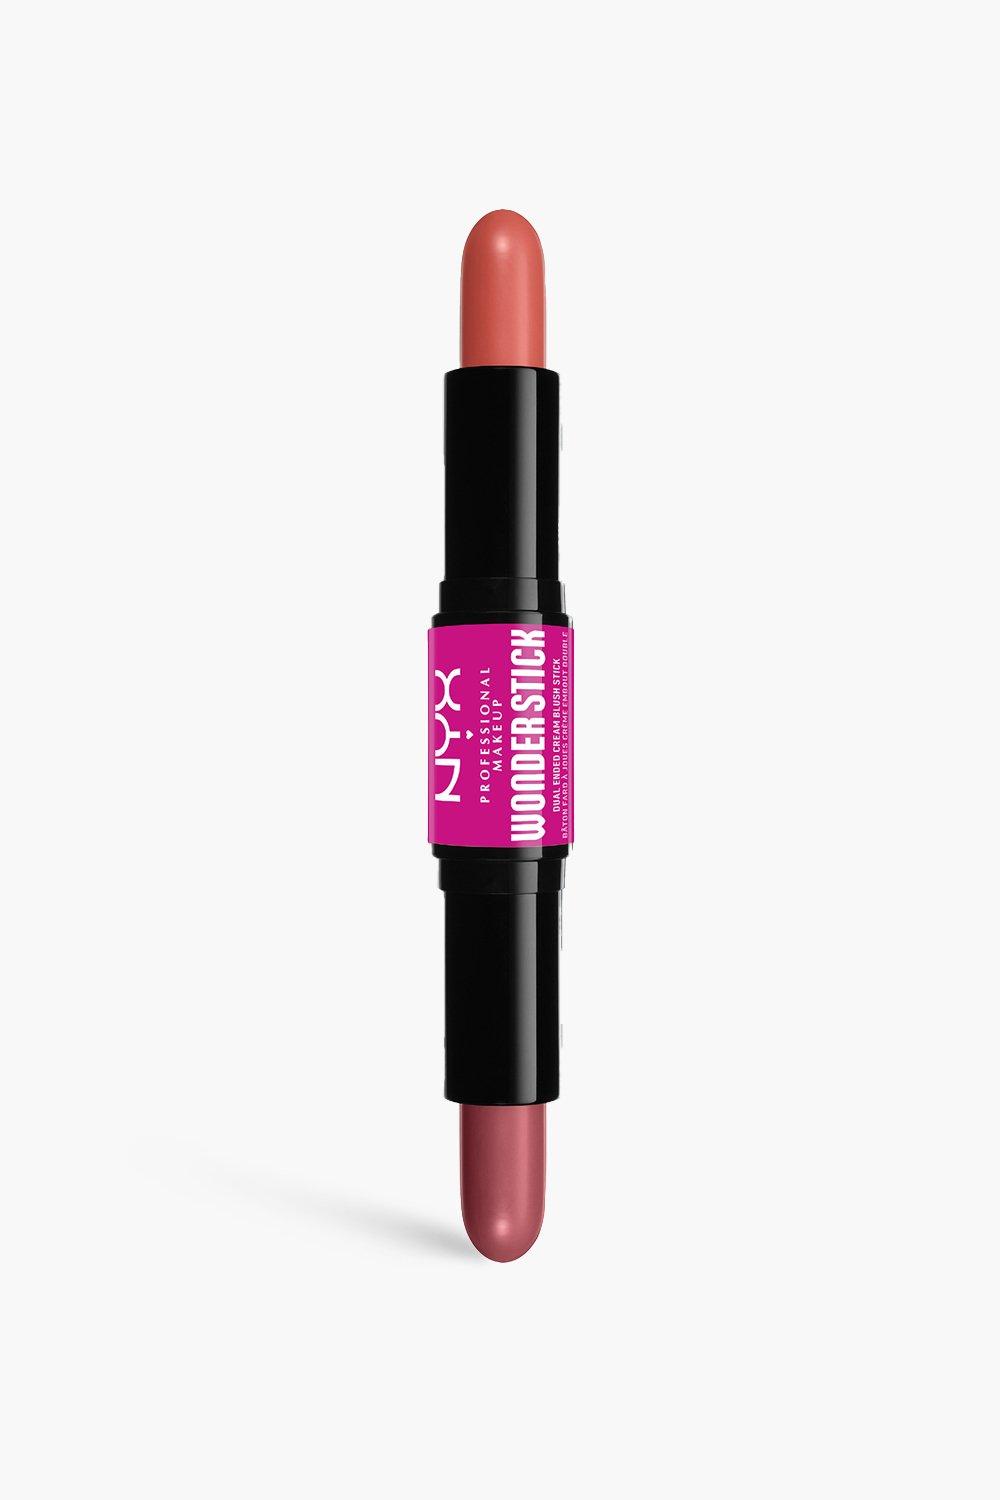 Nyx Professional Makeup Wonder Stick Blush, Honey Orange + Rose